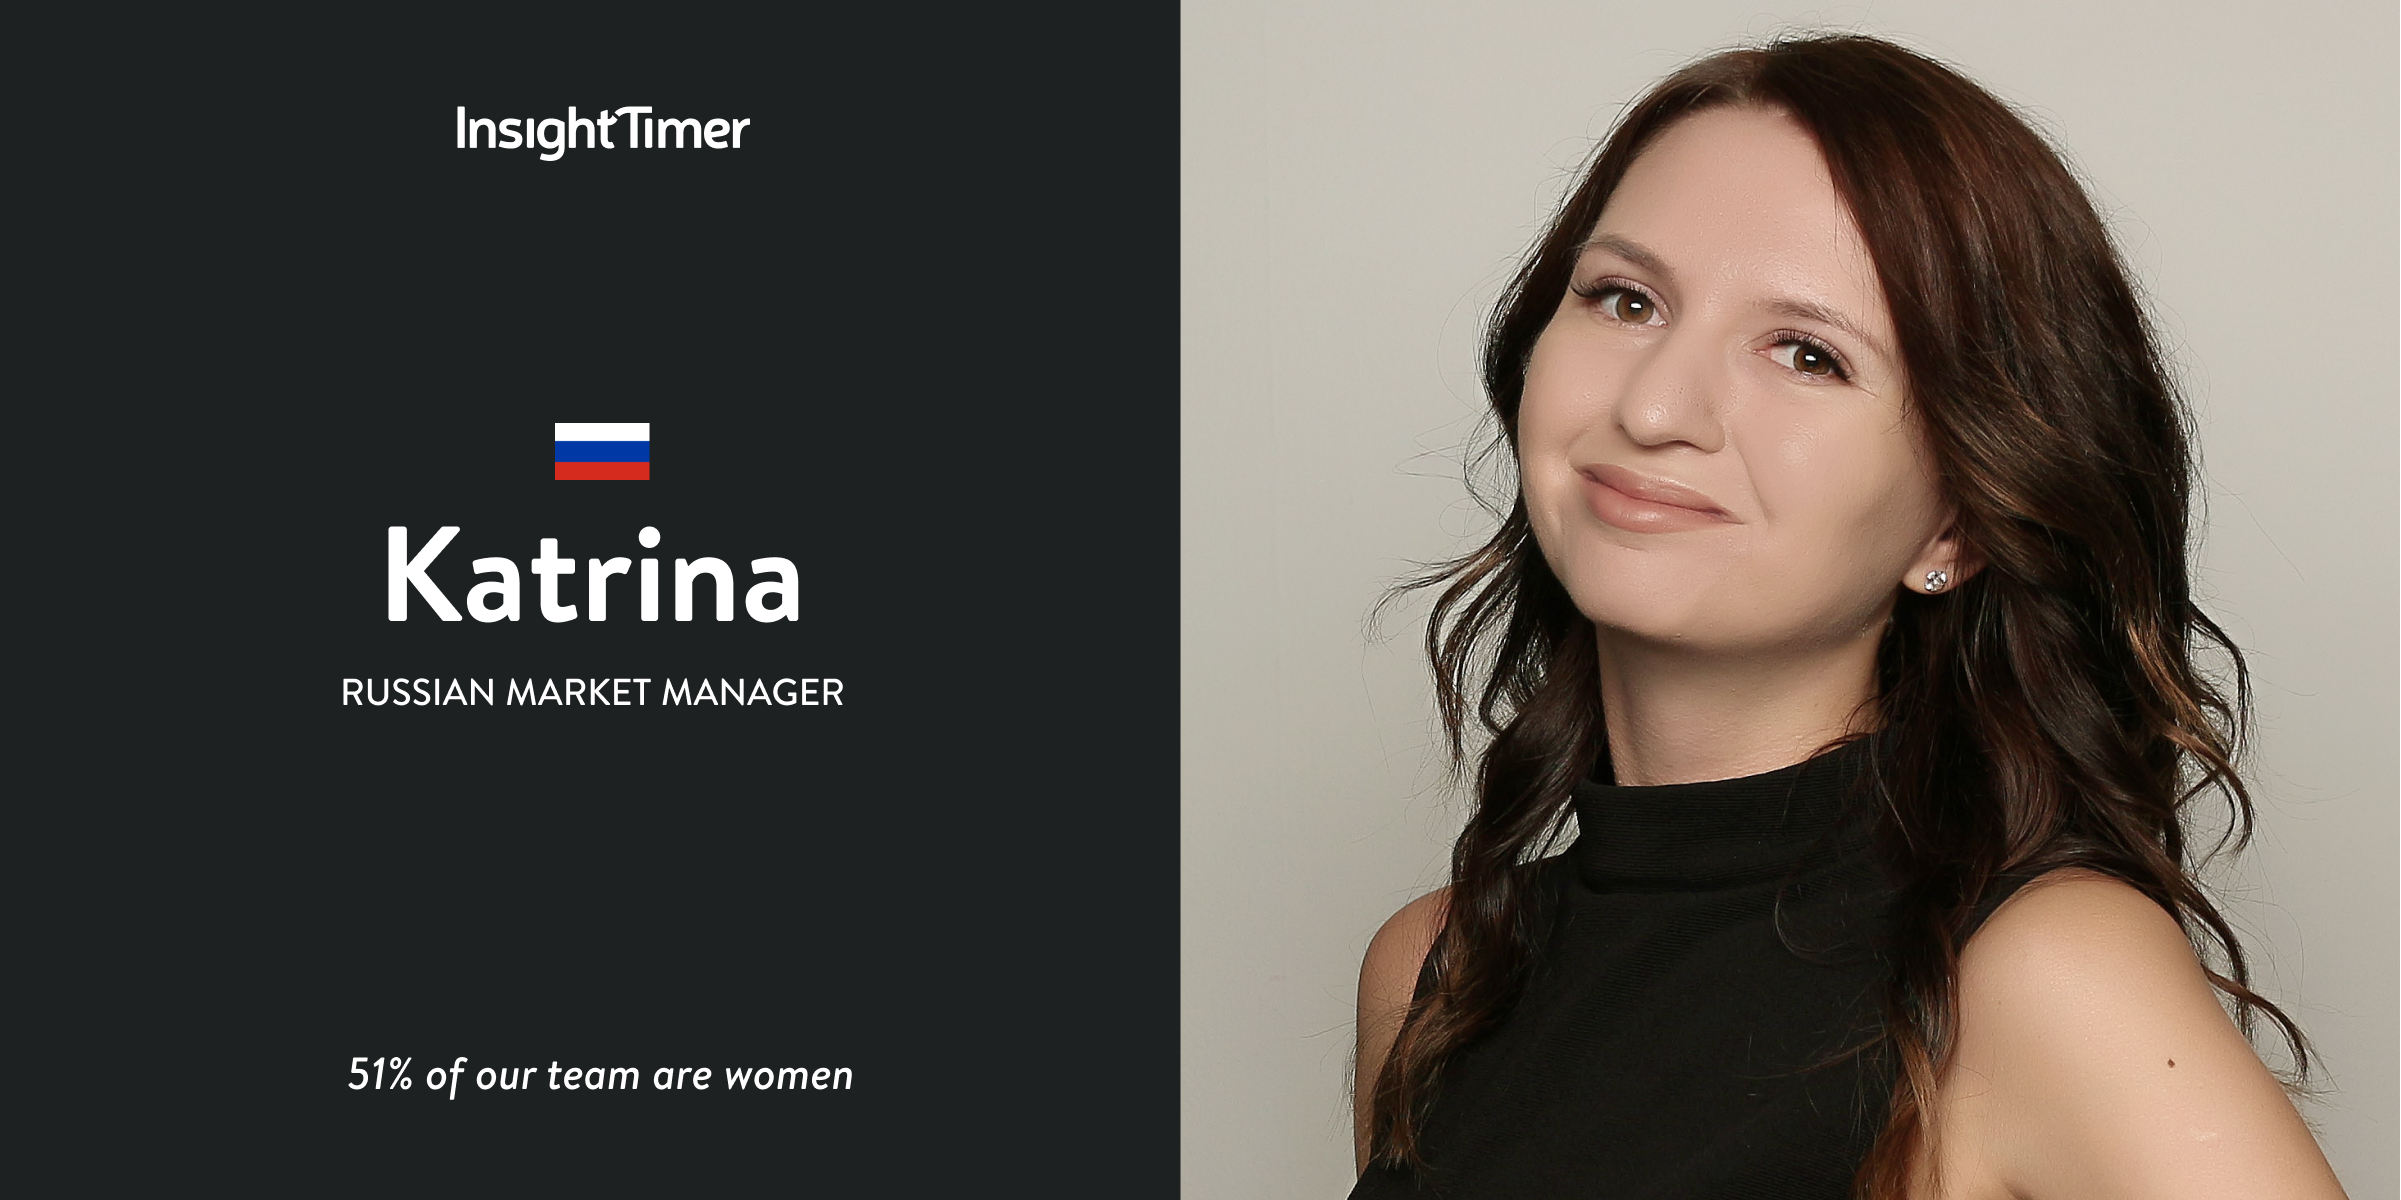 Meet Katrina – Russian Market Manager